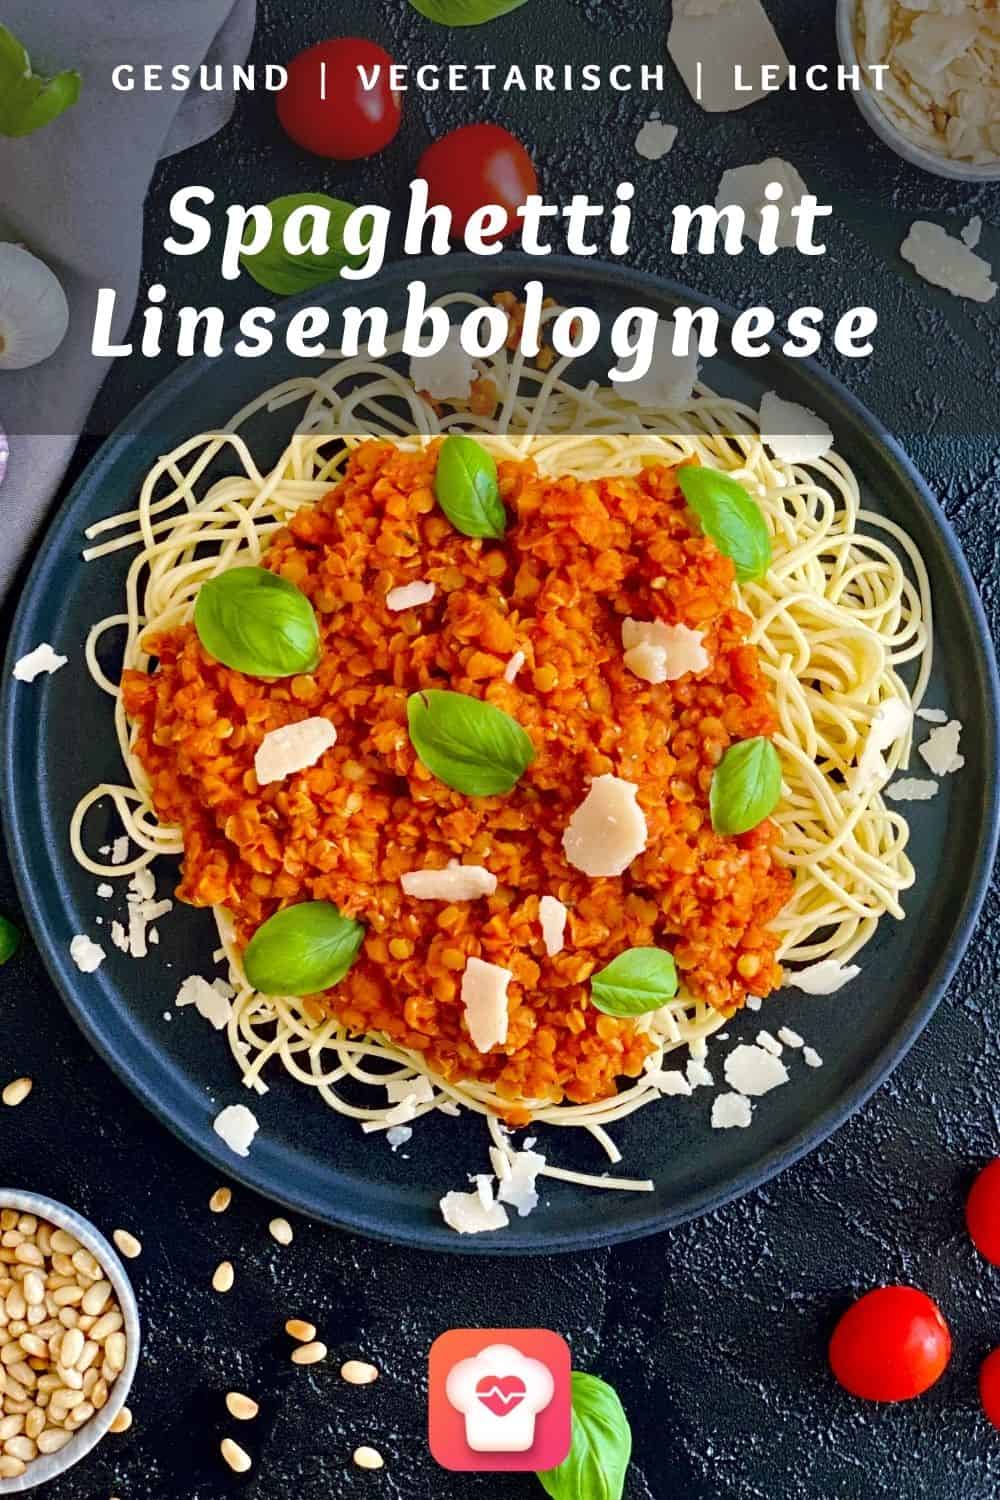 Spaghetti mit Linsenbolognese - Vegetarische Bolognese